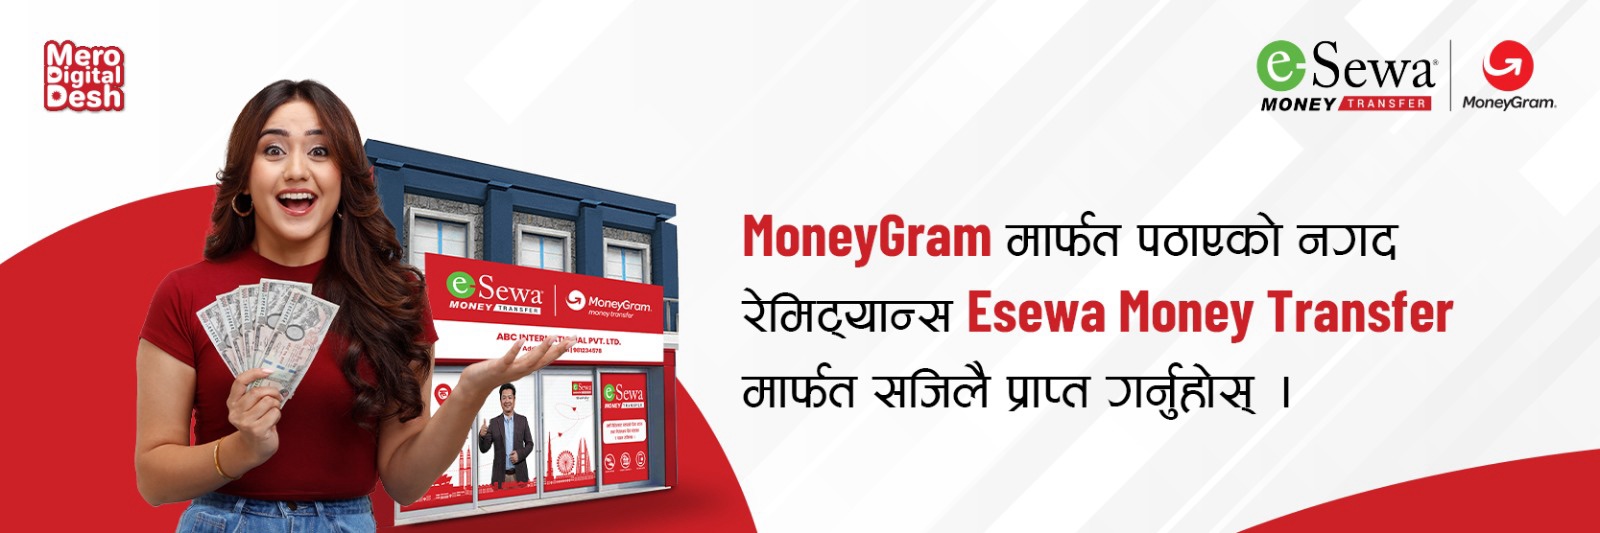 MoneyGram expands cash payout service in Nepal through Esewa Money Transfer